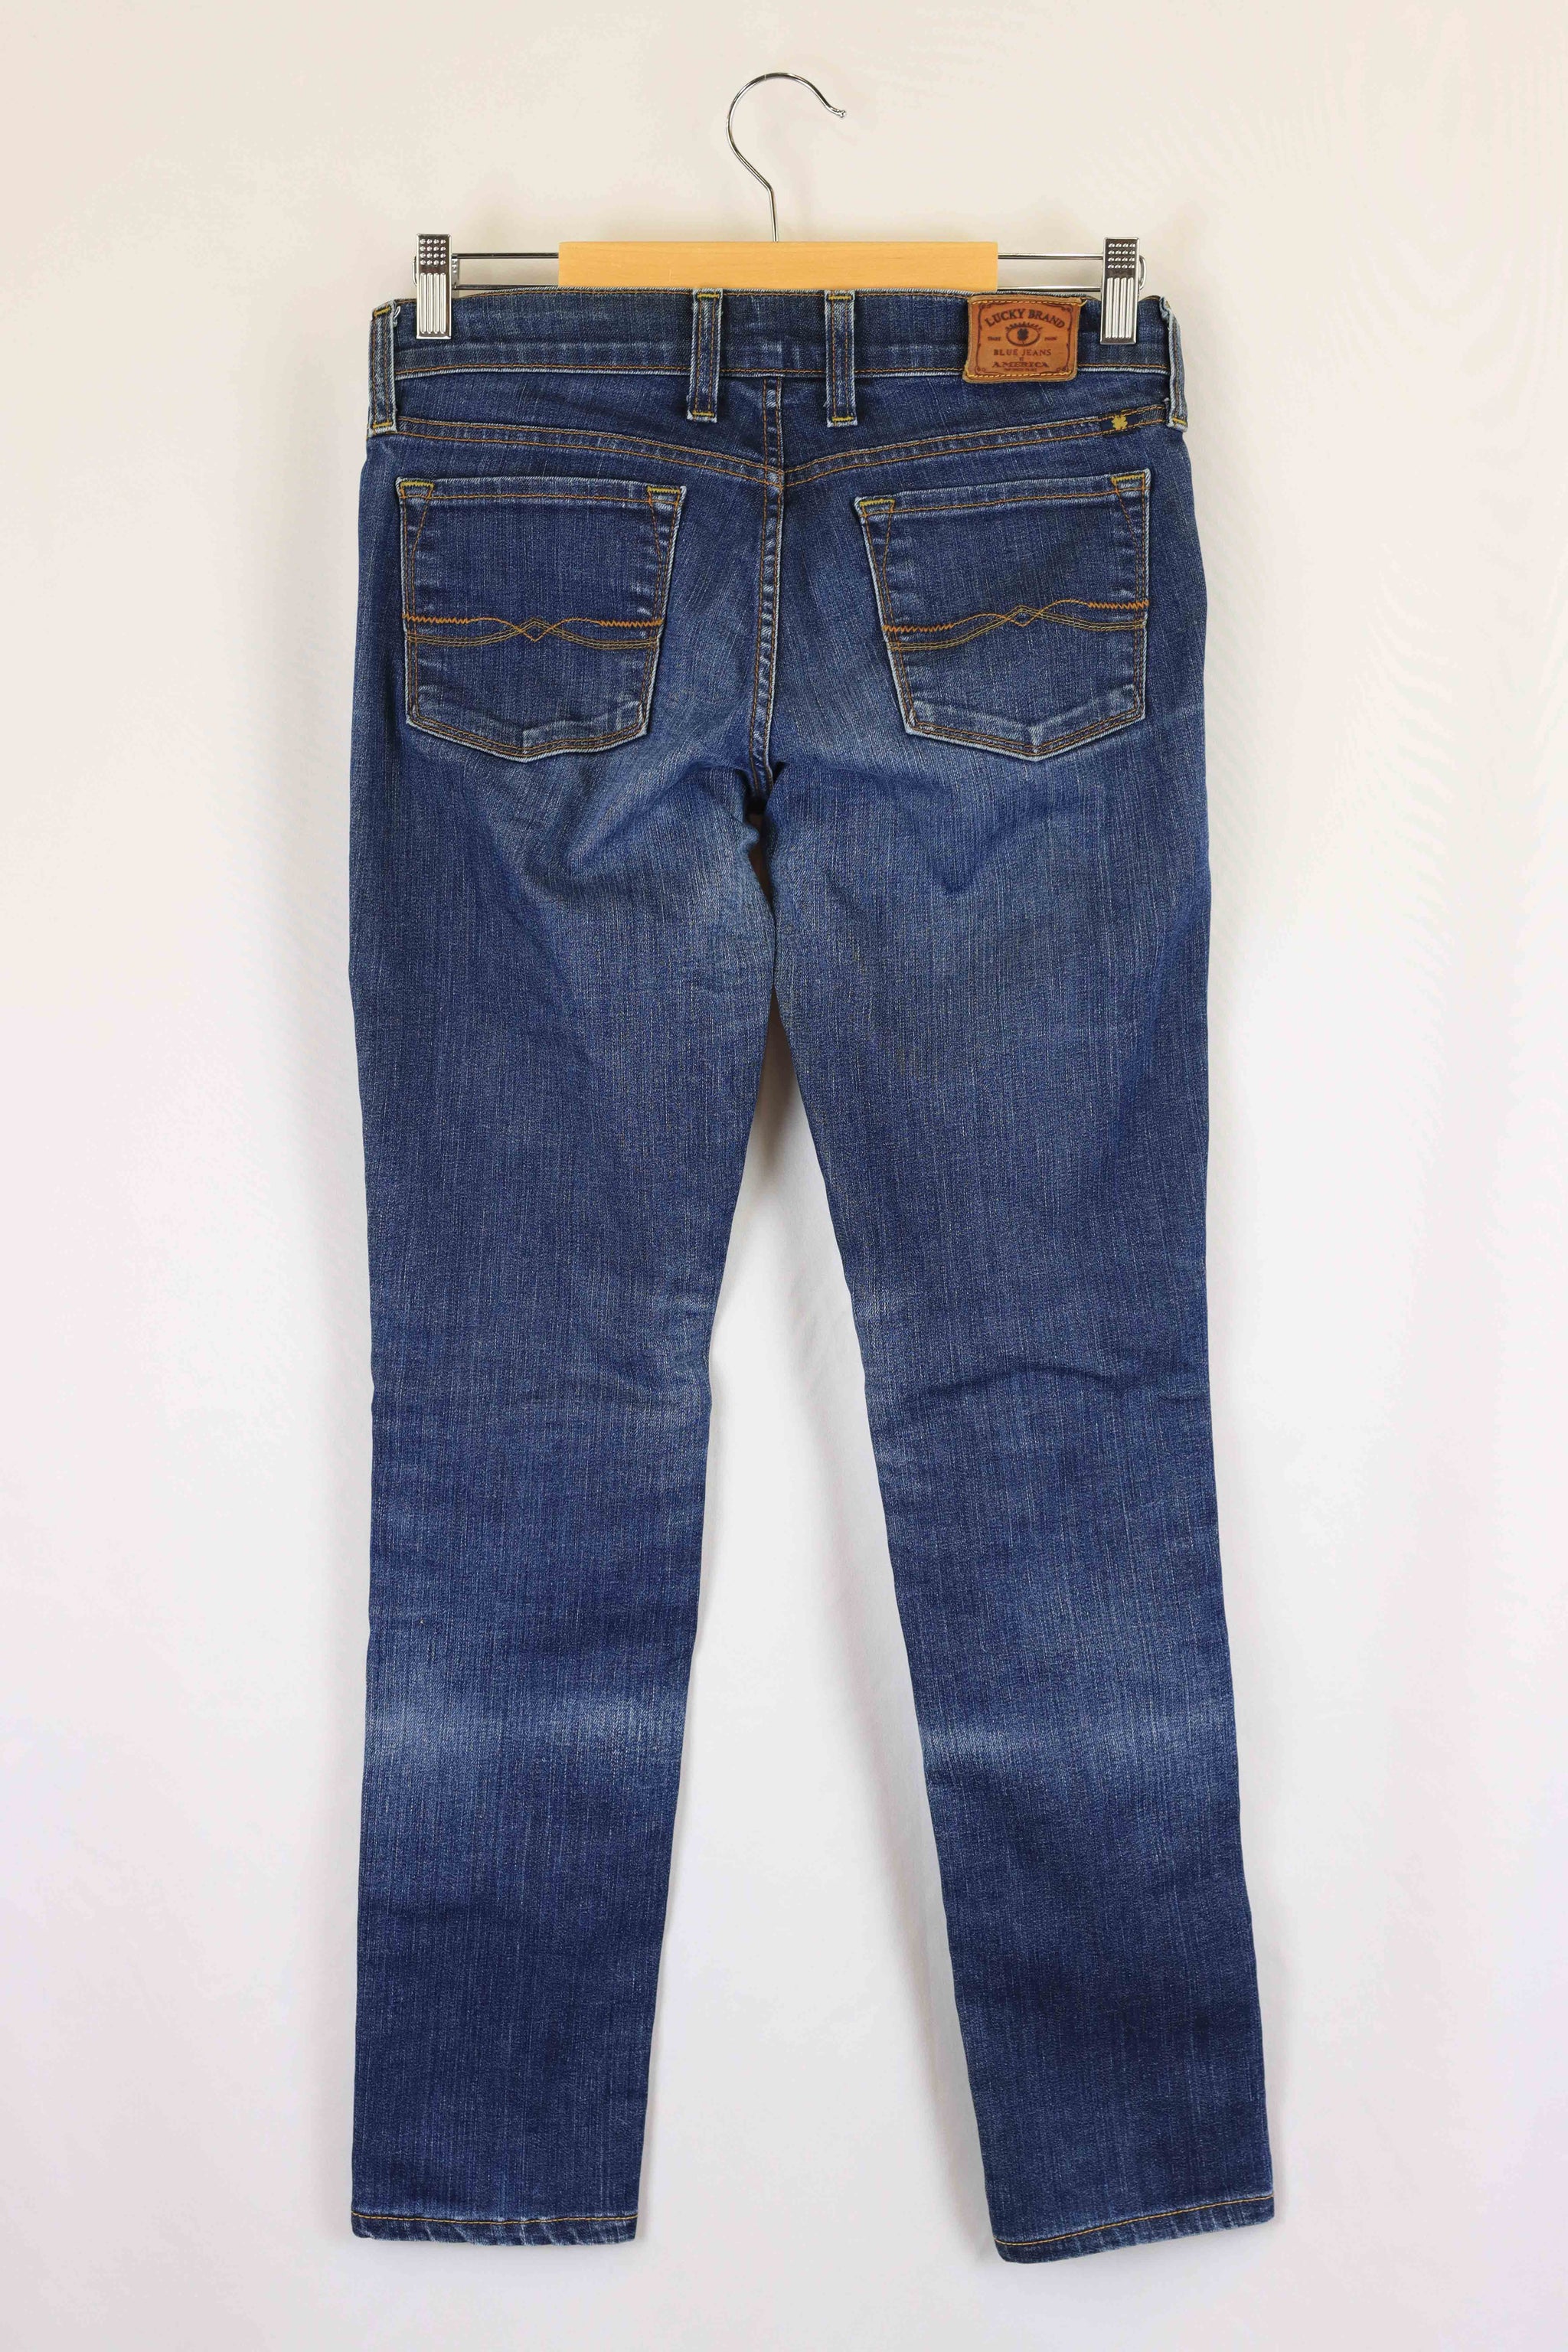 Lucky Brand Blue Jeans 8 - Reluv Clothing Australia